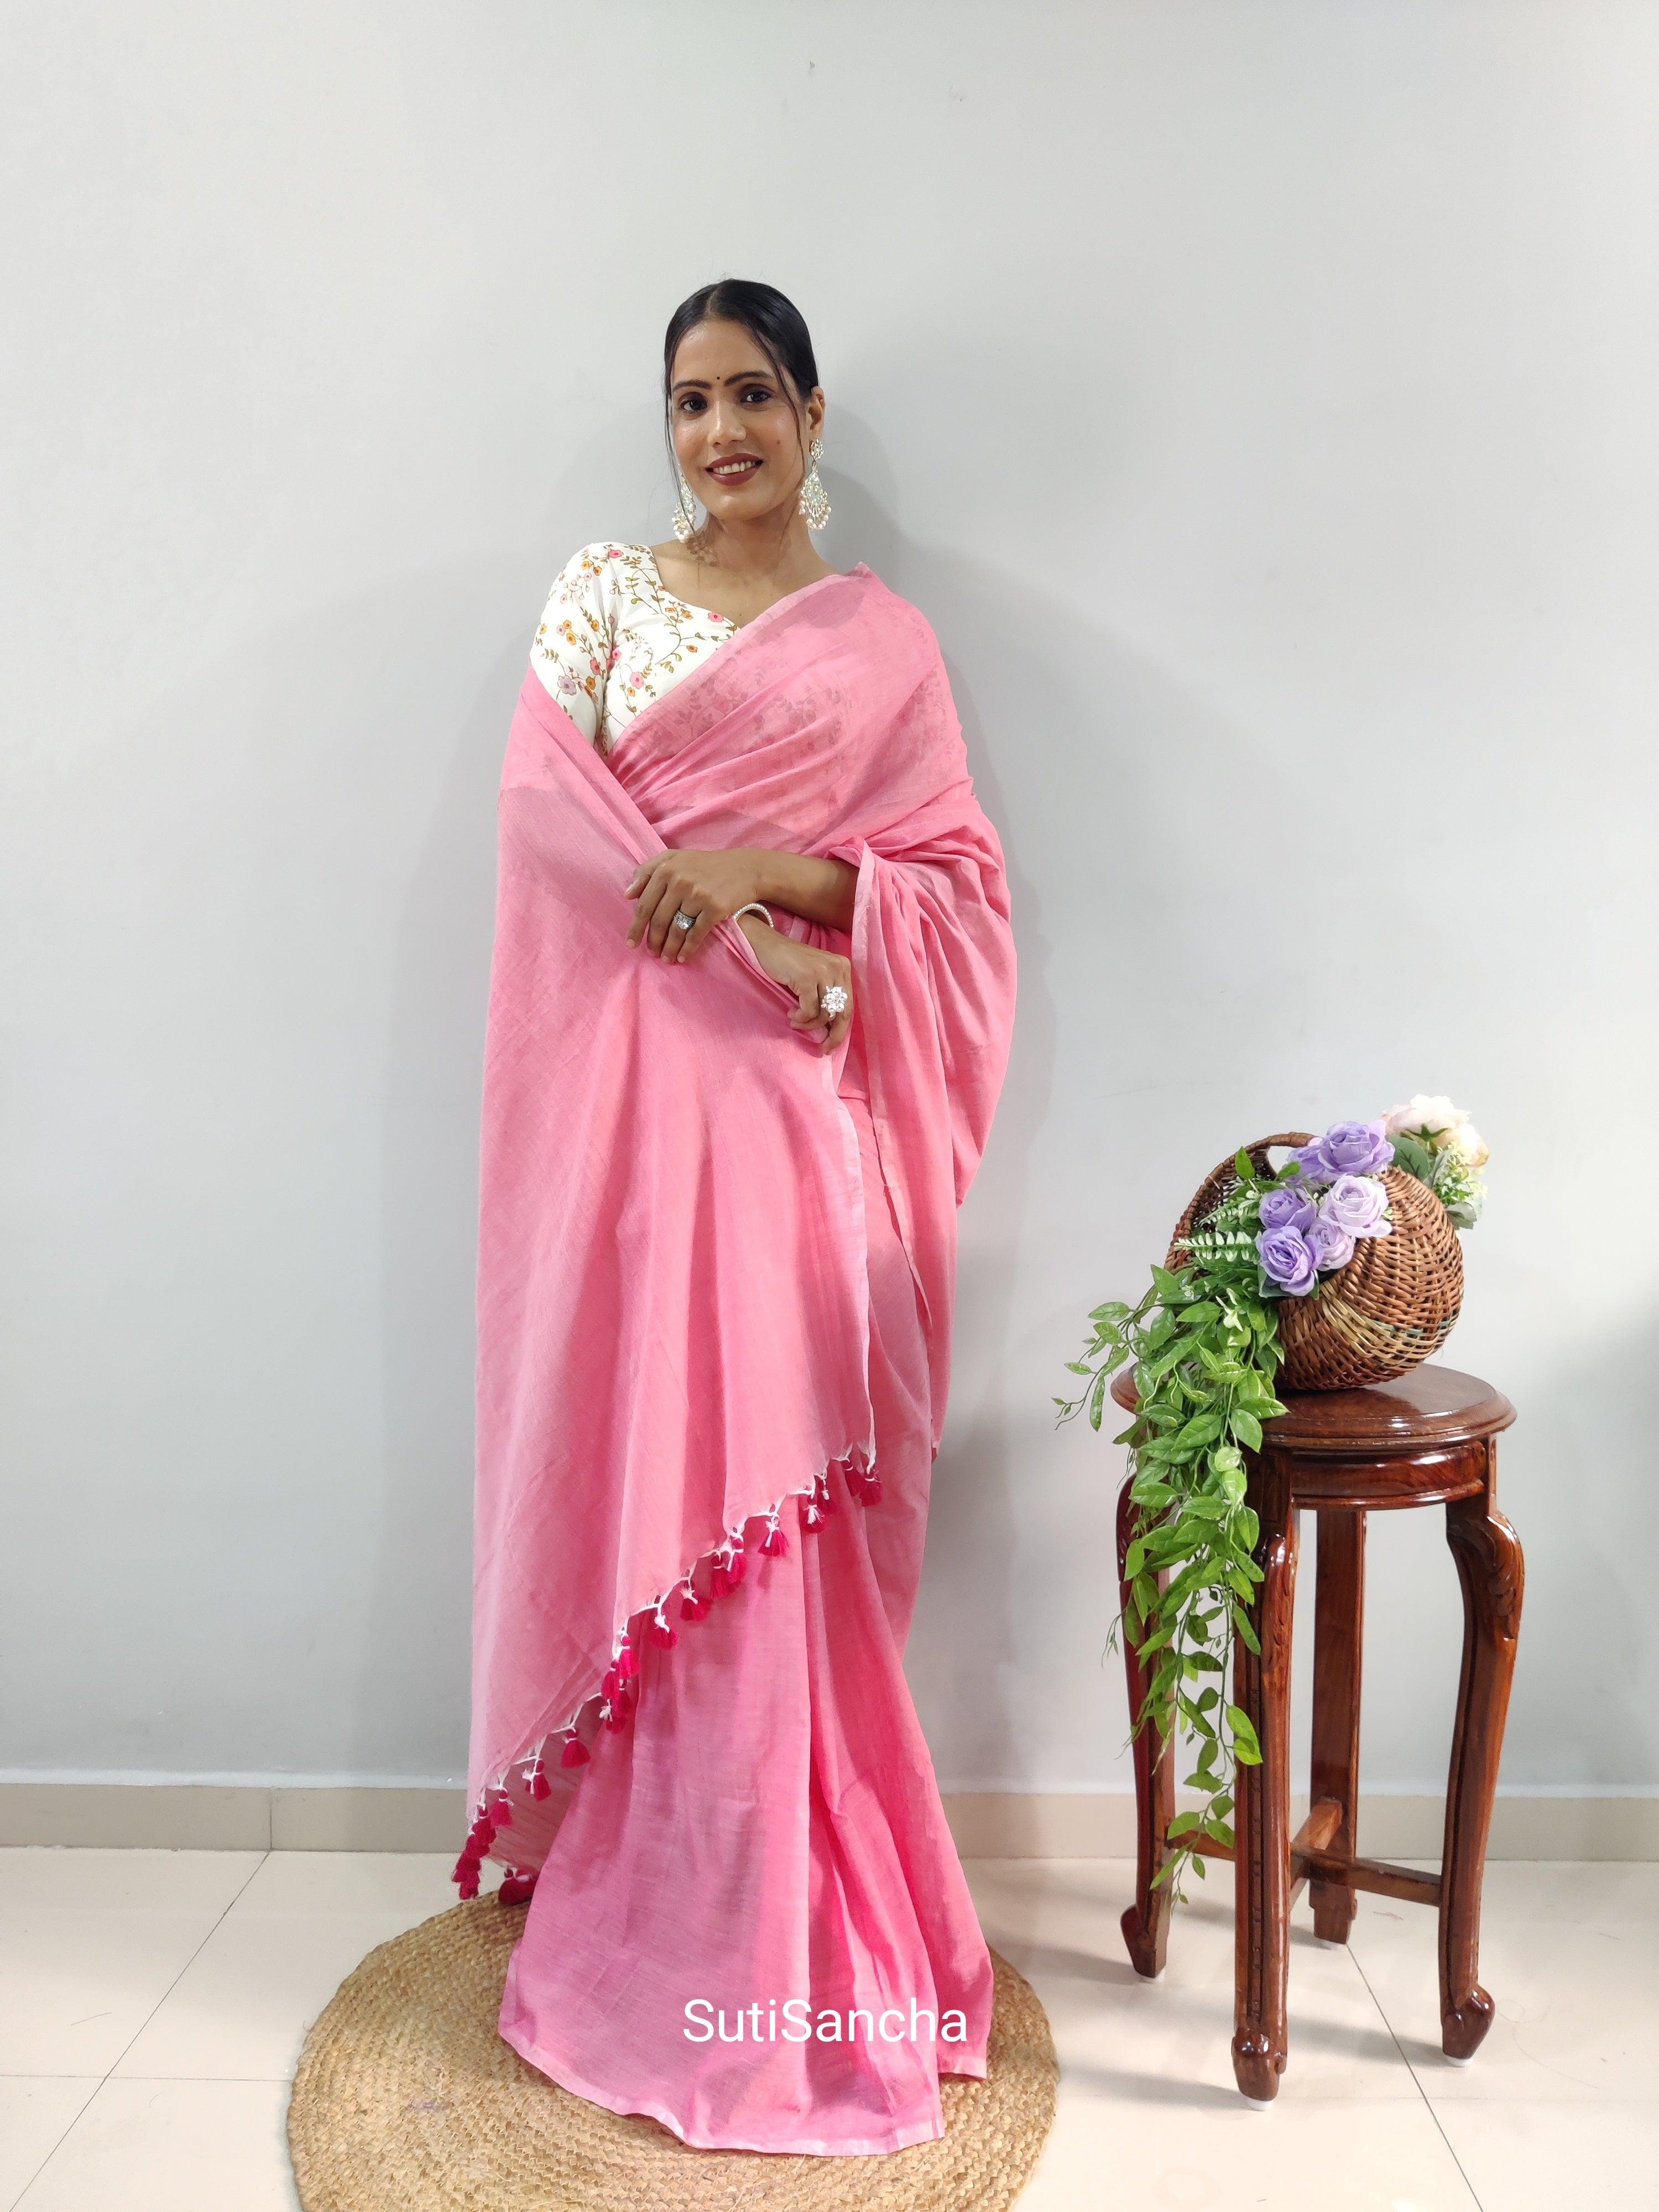 Sutisancha Peach colour Khadi Saree & designer Blouse - Suti Sancha